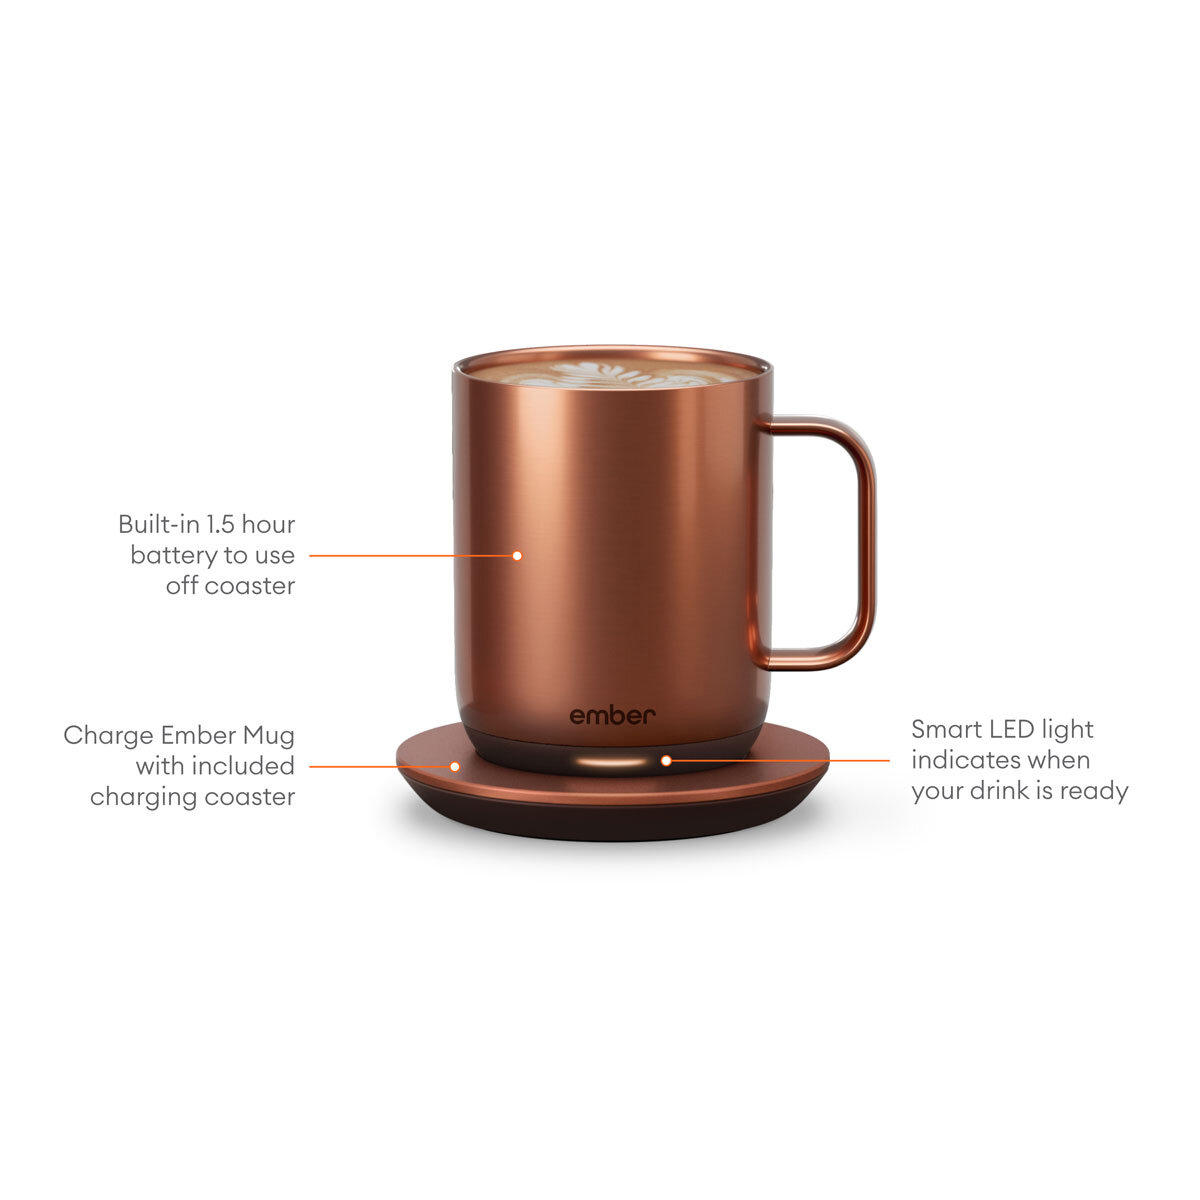 Description of Ember Copper Mug functionality